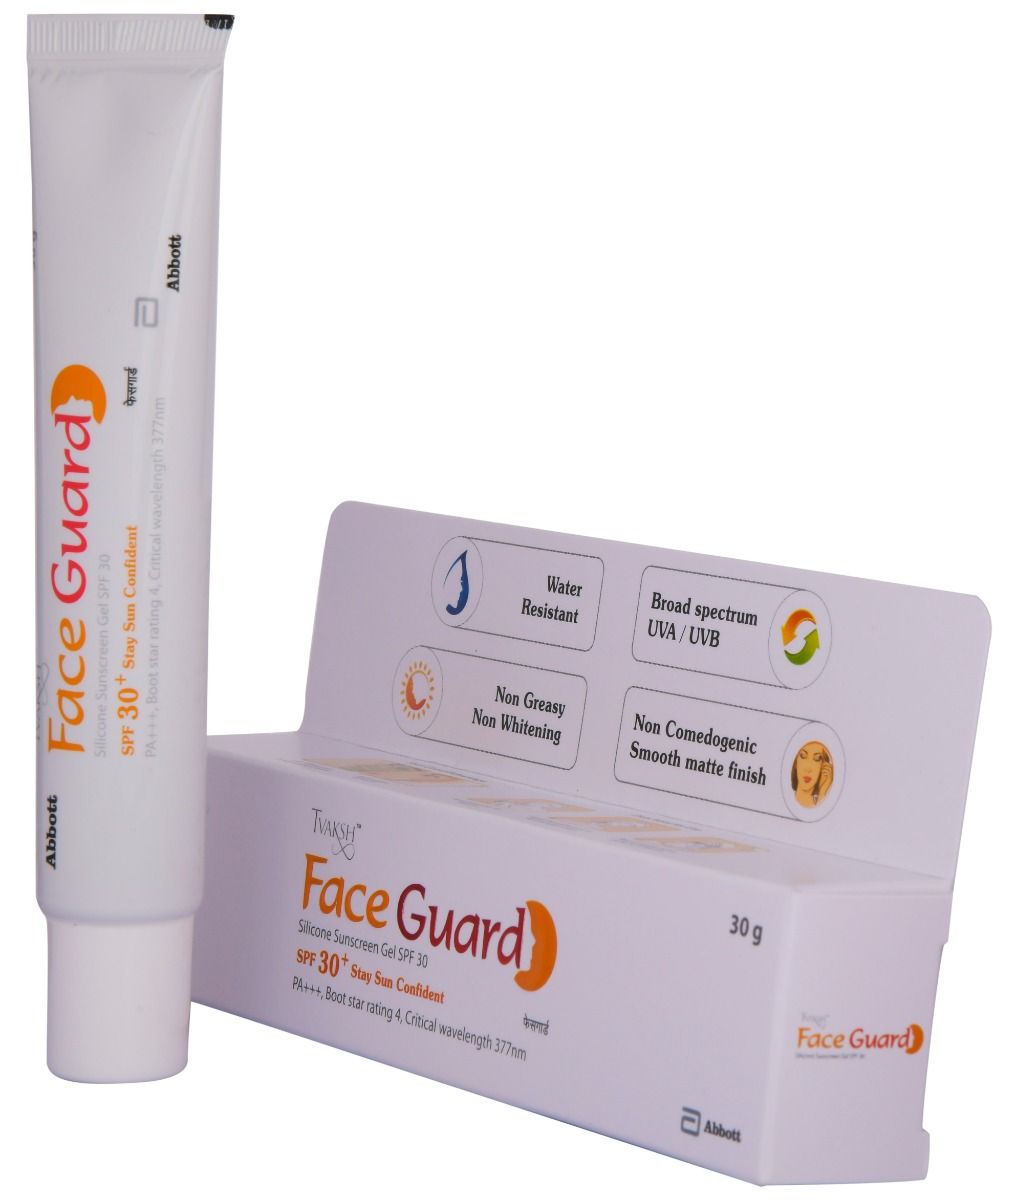 Tvaksh Face Guard SPF 30+ PA+++ Sunscreen Gel, 30 gm, Pack of 1 